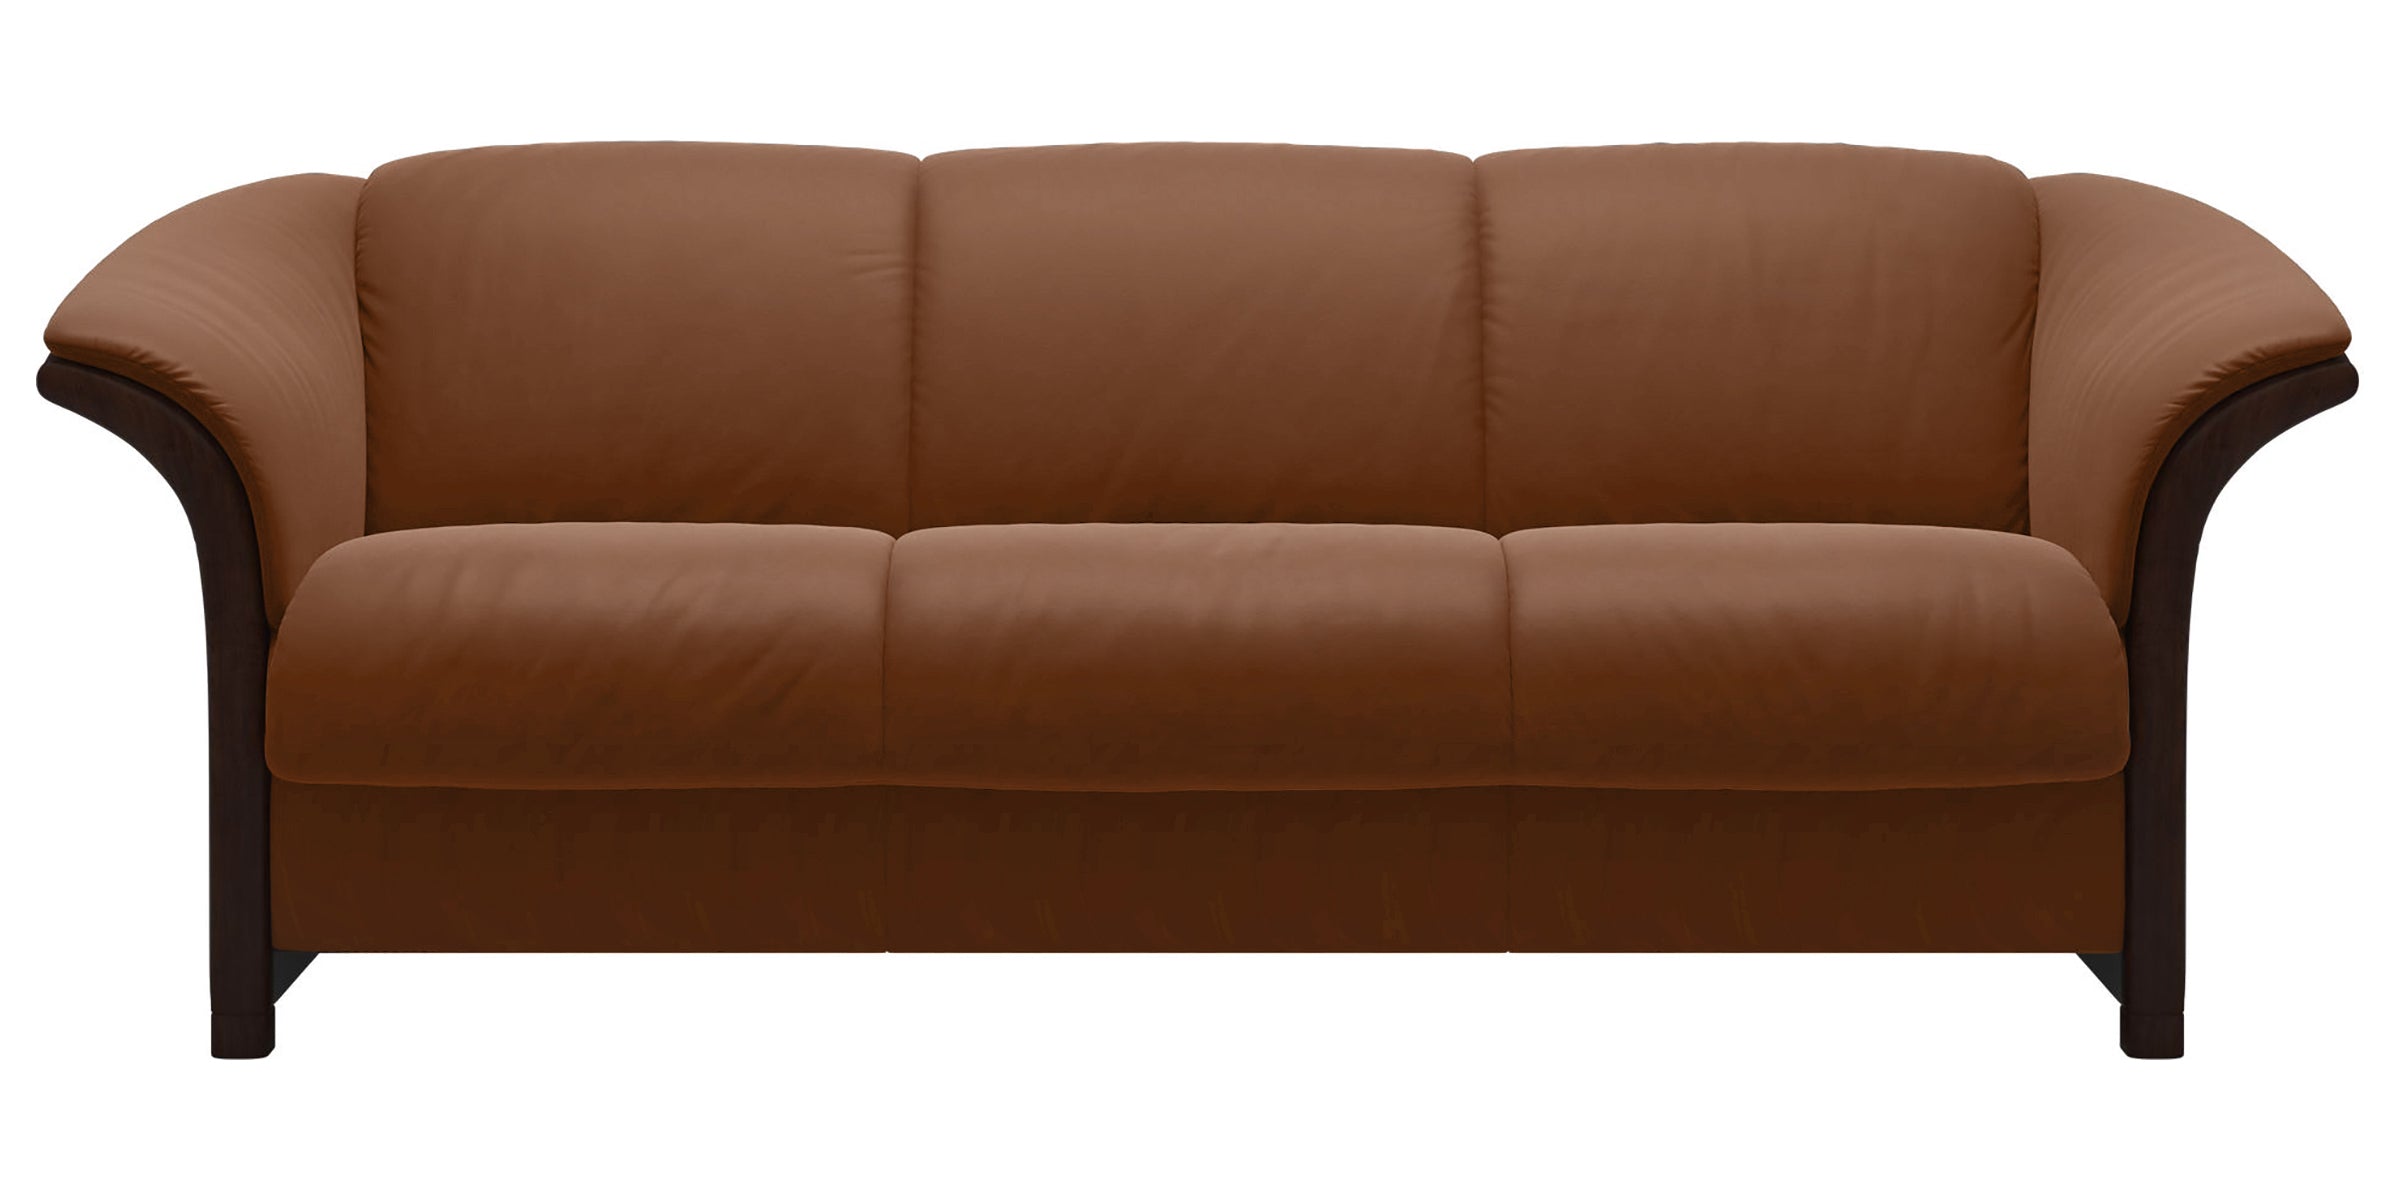 Paloma Leather New Cognac and Brown Arm Trim | Stressless Manhattan Sofa | Valley Ridge Furniture